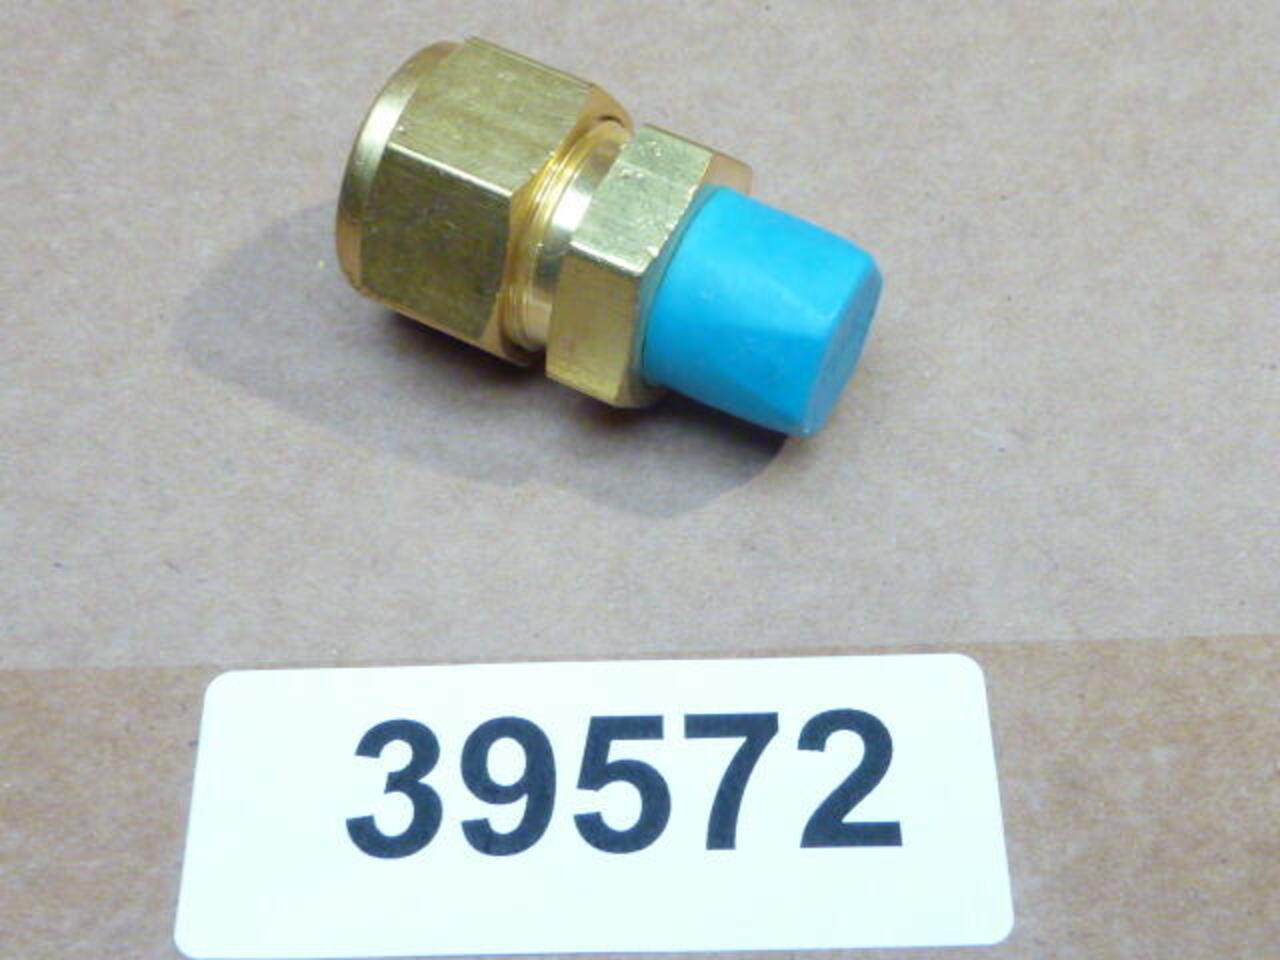 B-1010-6 1-Swagelok Brass Union Fitting 5/8" Tube x 5/8" Tube 